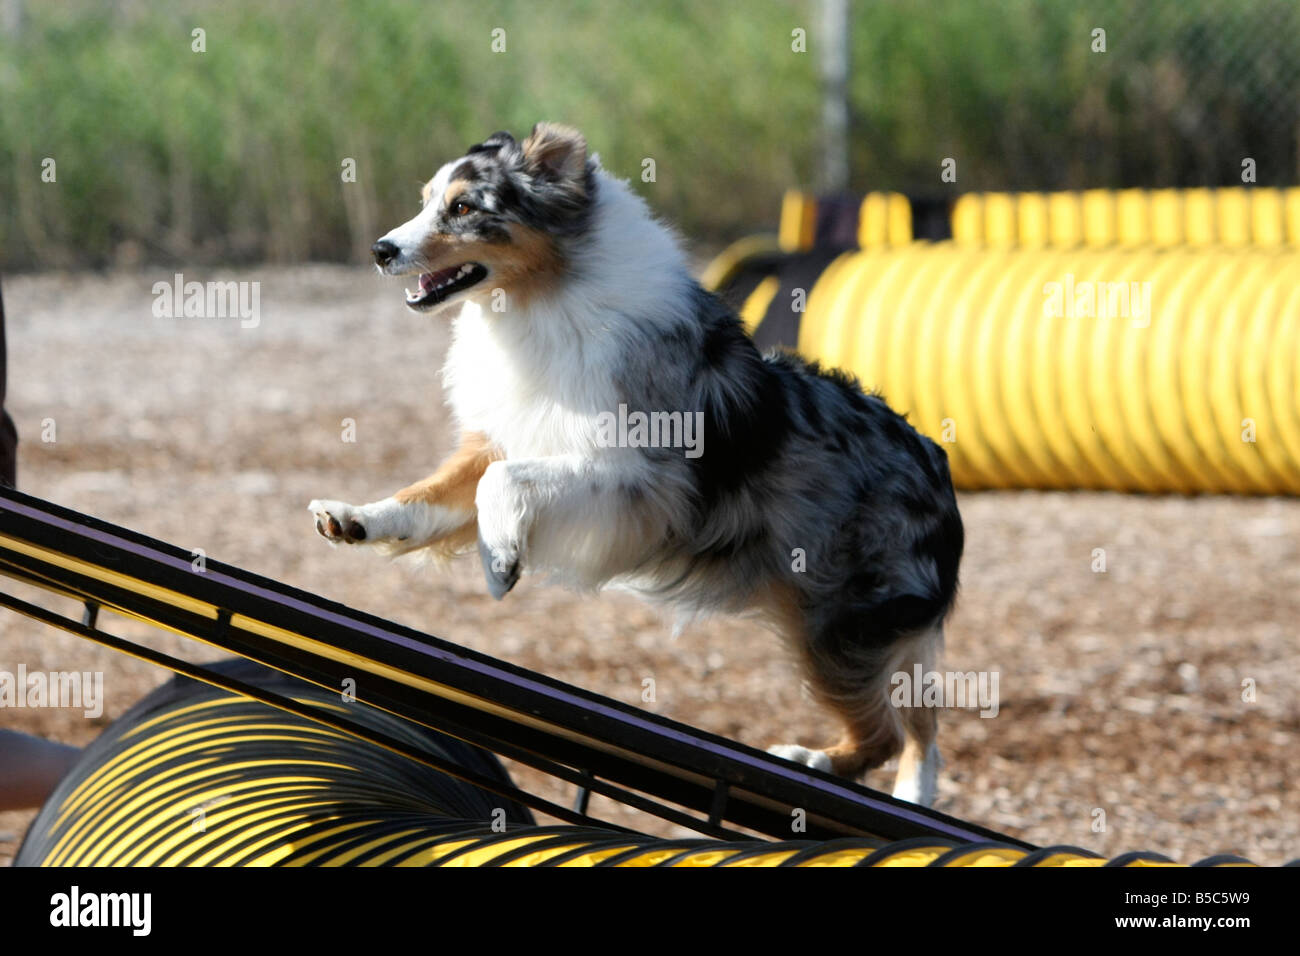 Australian shepherd running up a dog walk at an agility trial. Stock Photo